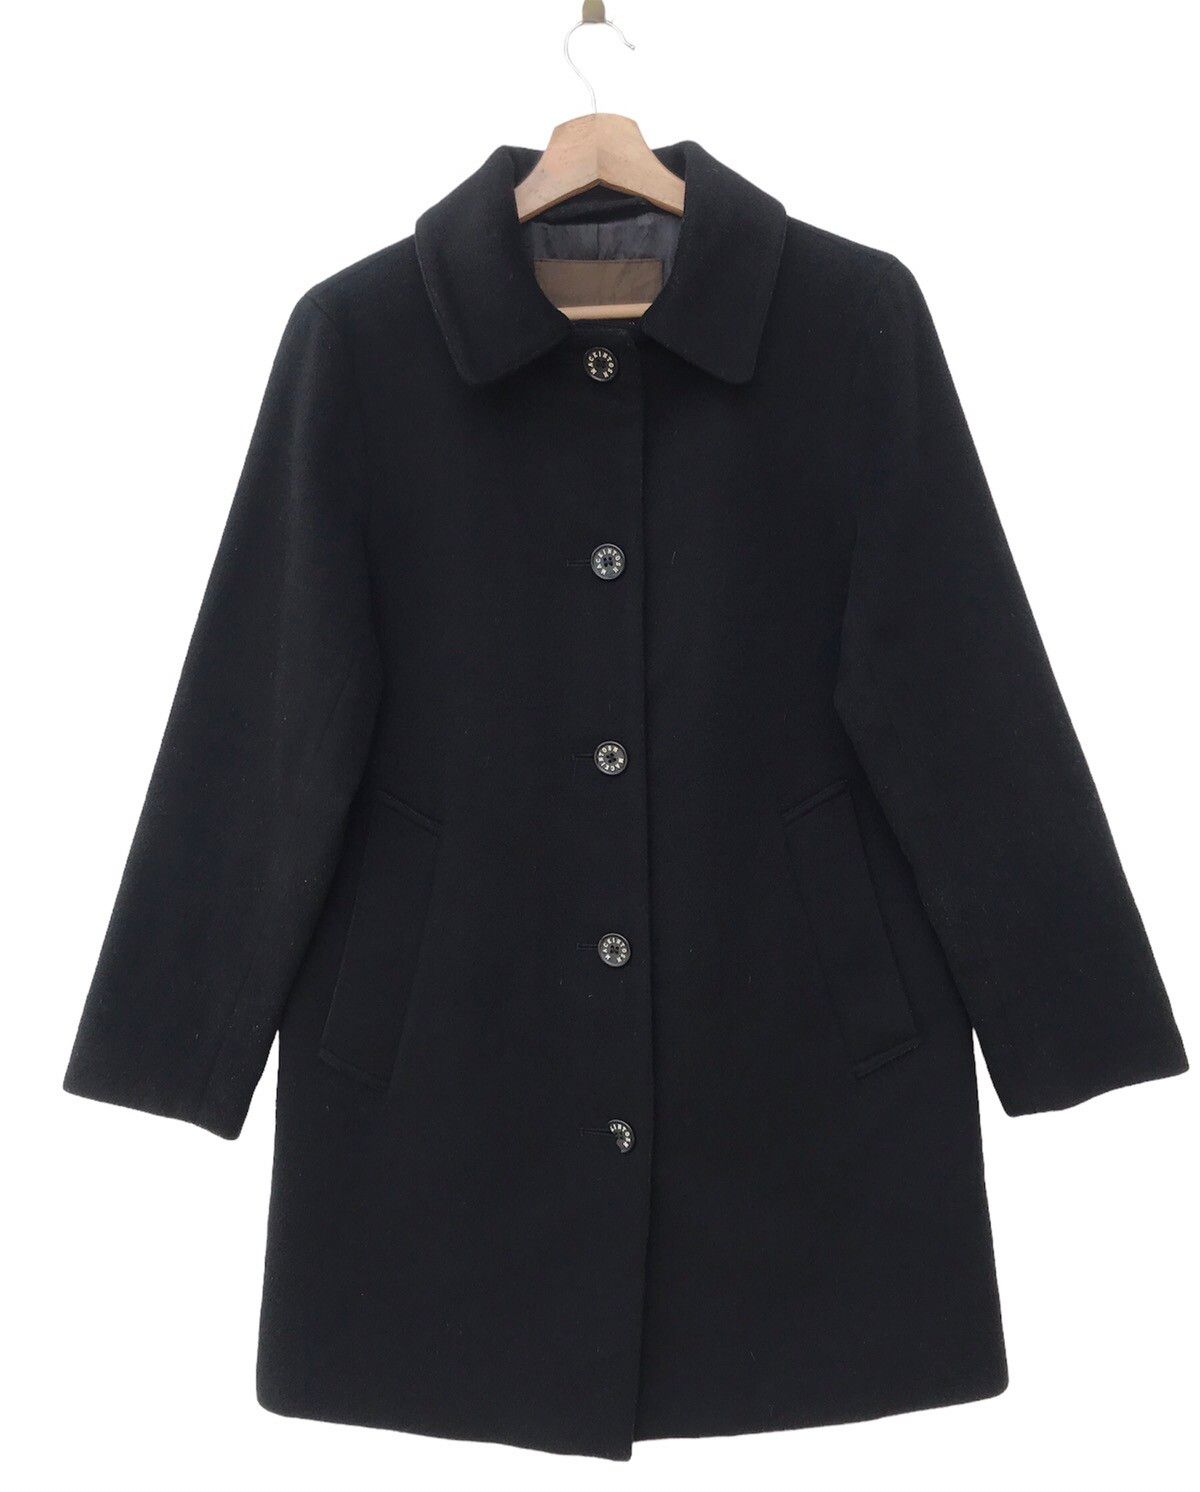 Mackintosh Wool Made in Scotland Long Coat Jacket - 1